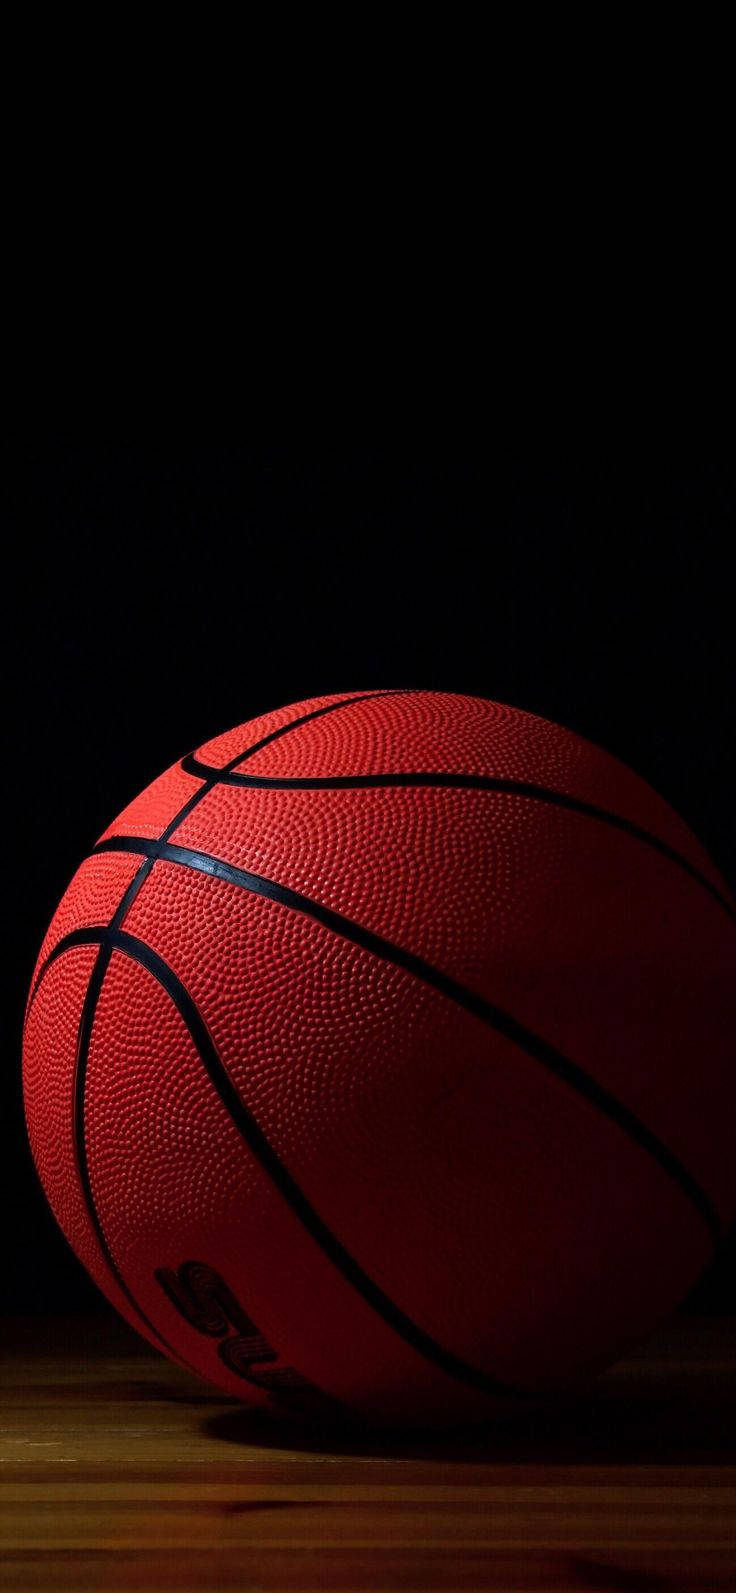 Ball Photography Cool Basketball Iphone Wallpaper